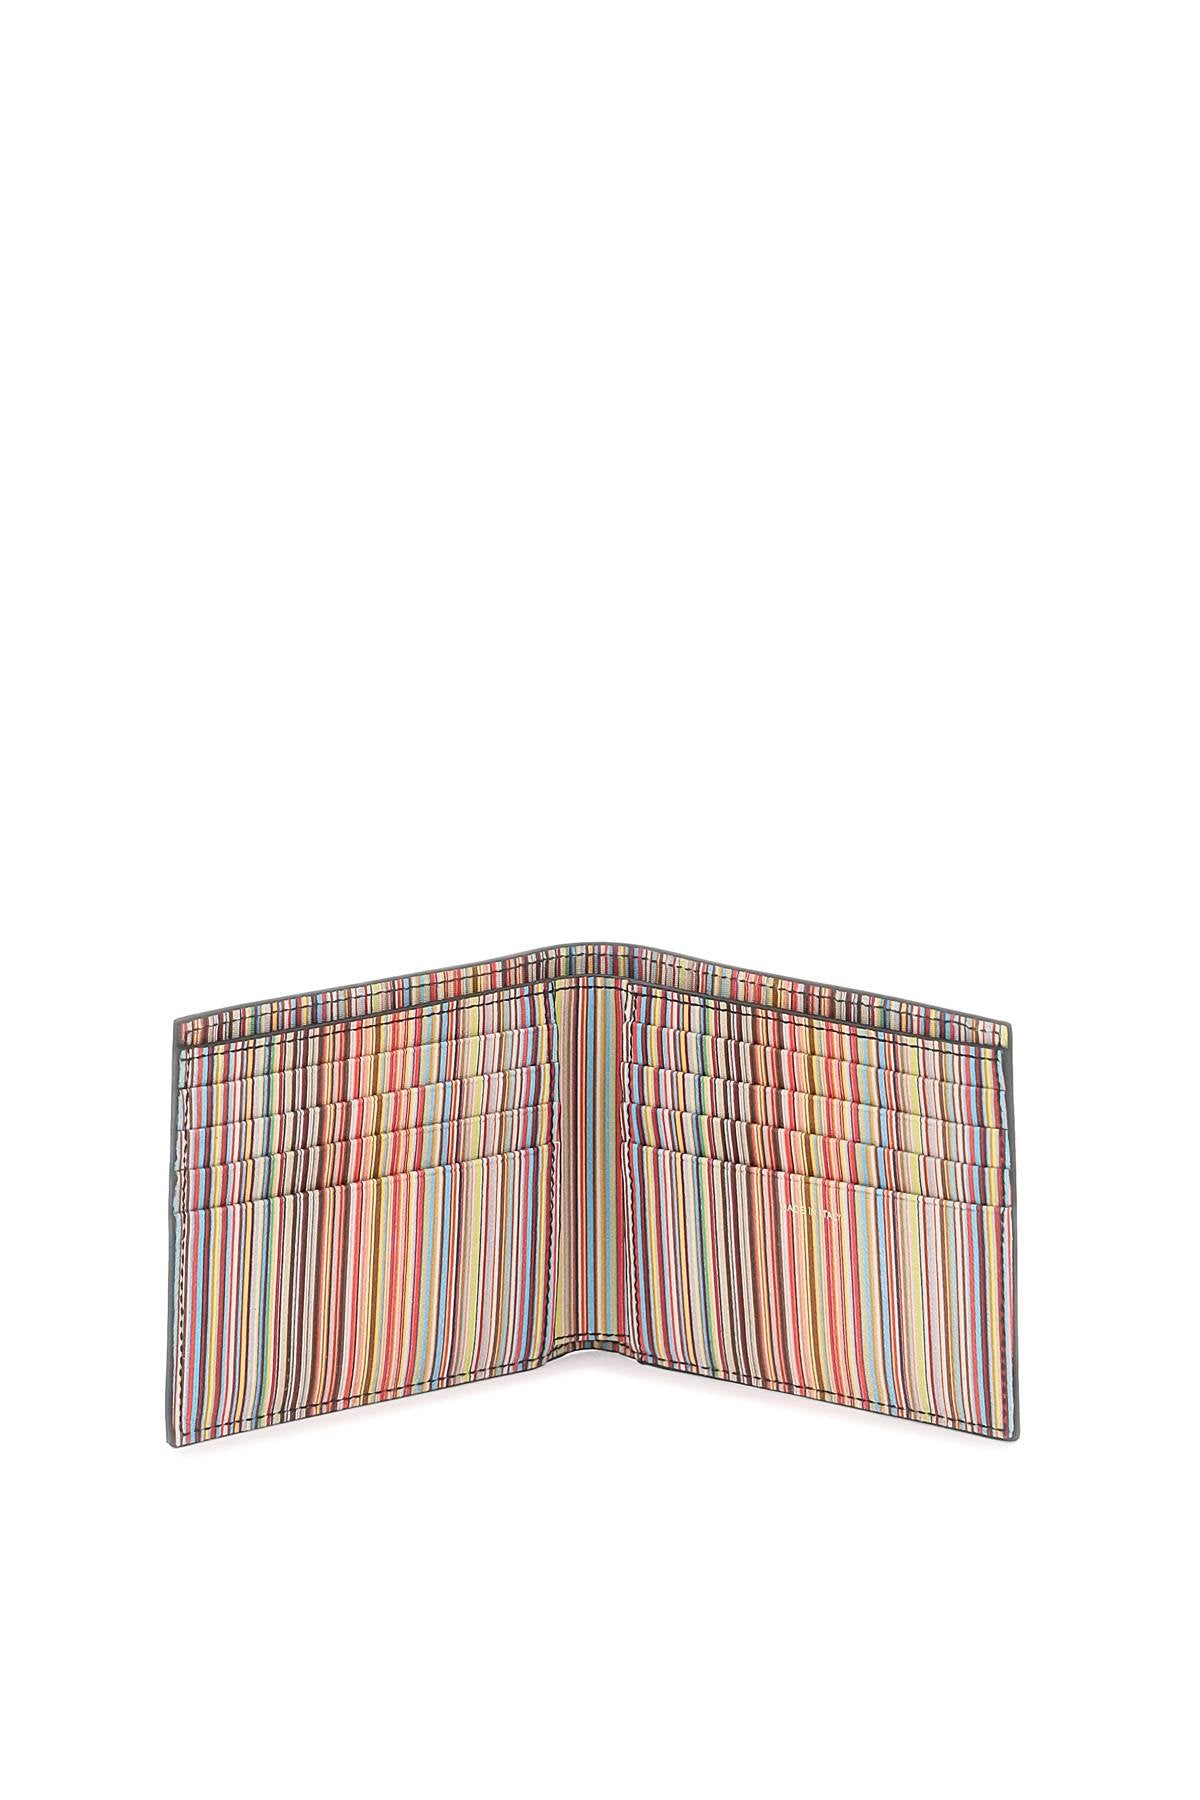 Paul smith signature stripe bifold wallet-1